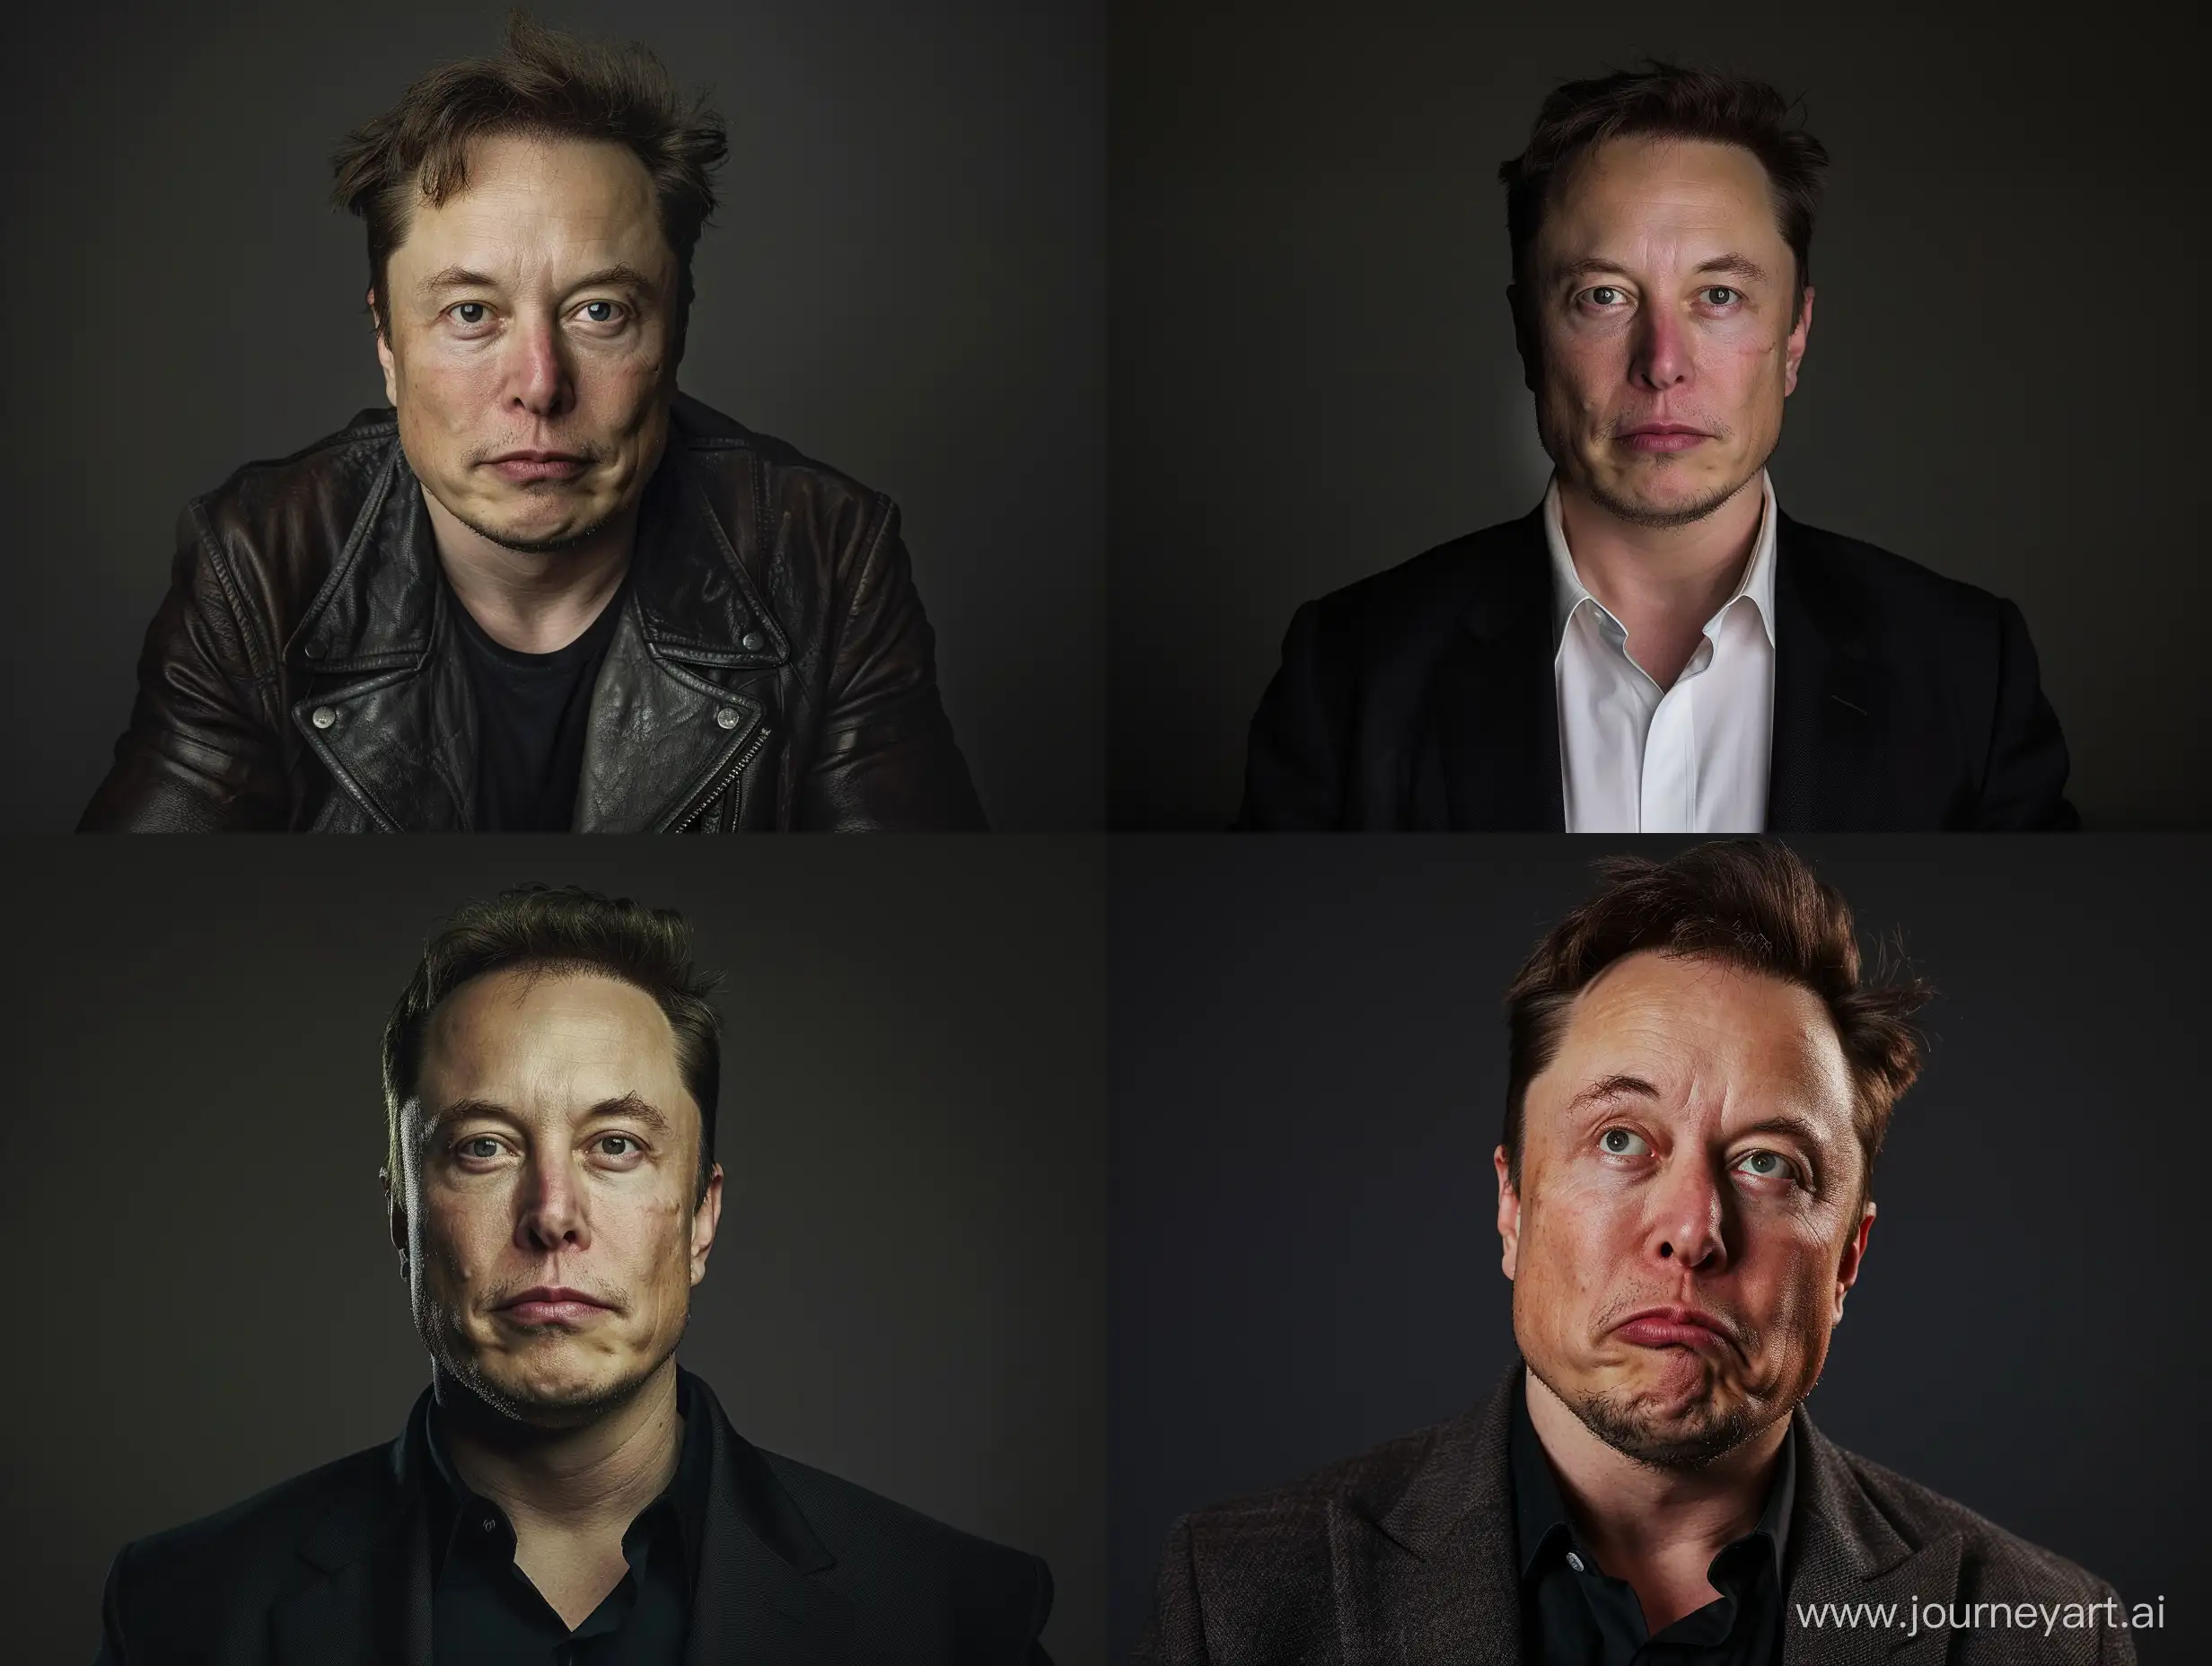 Elon-Musk-CloseUp-Portrait-on-Black-Background-with-Cinematic-Lighting